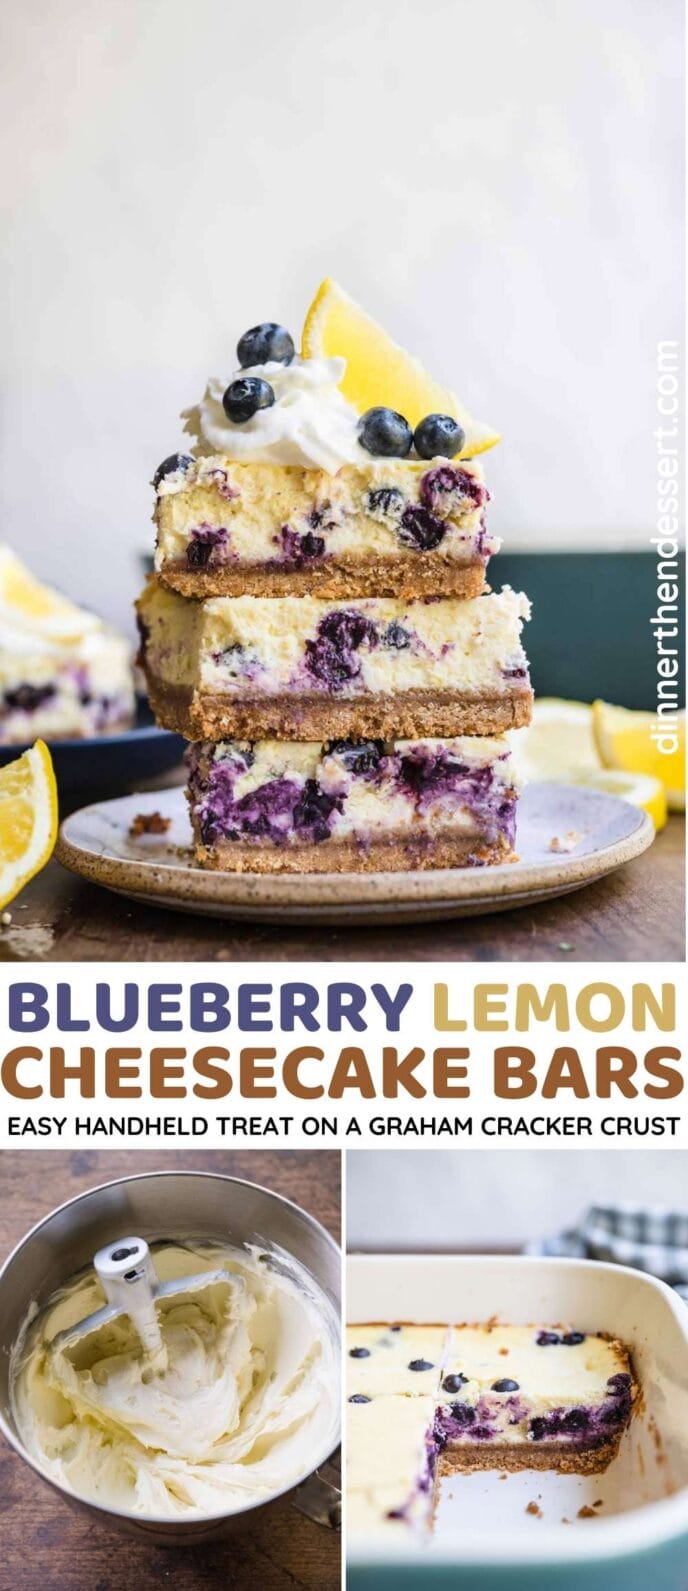 Blueberry Lemon Cheesecake Bars collage